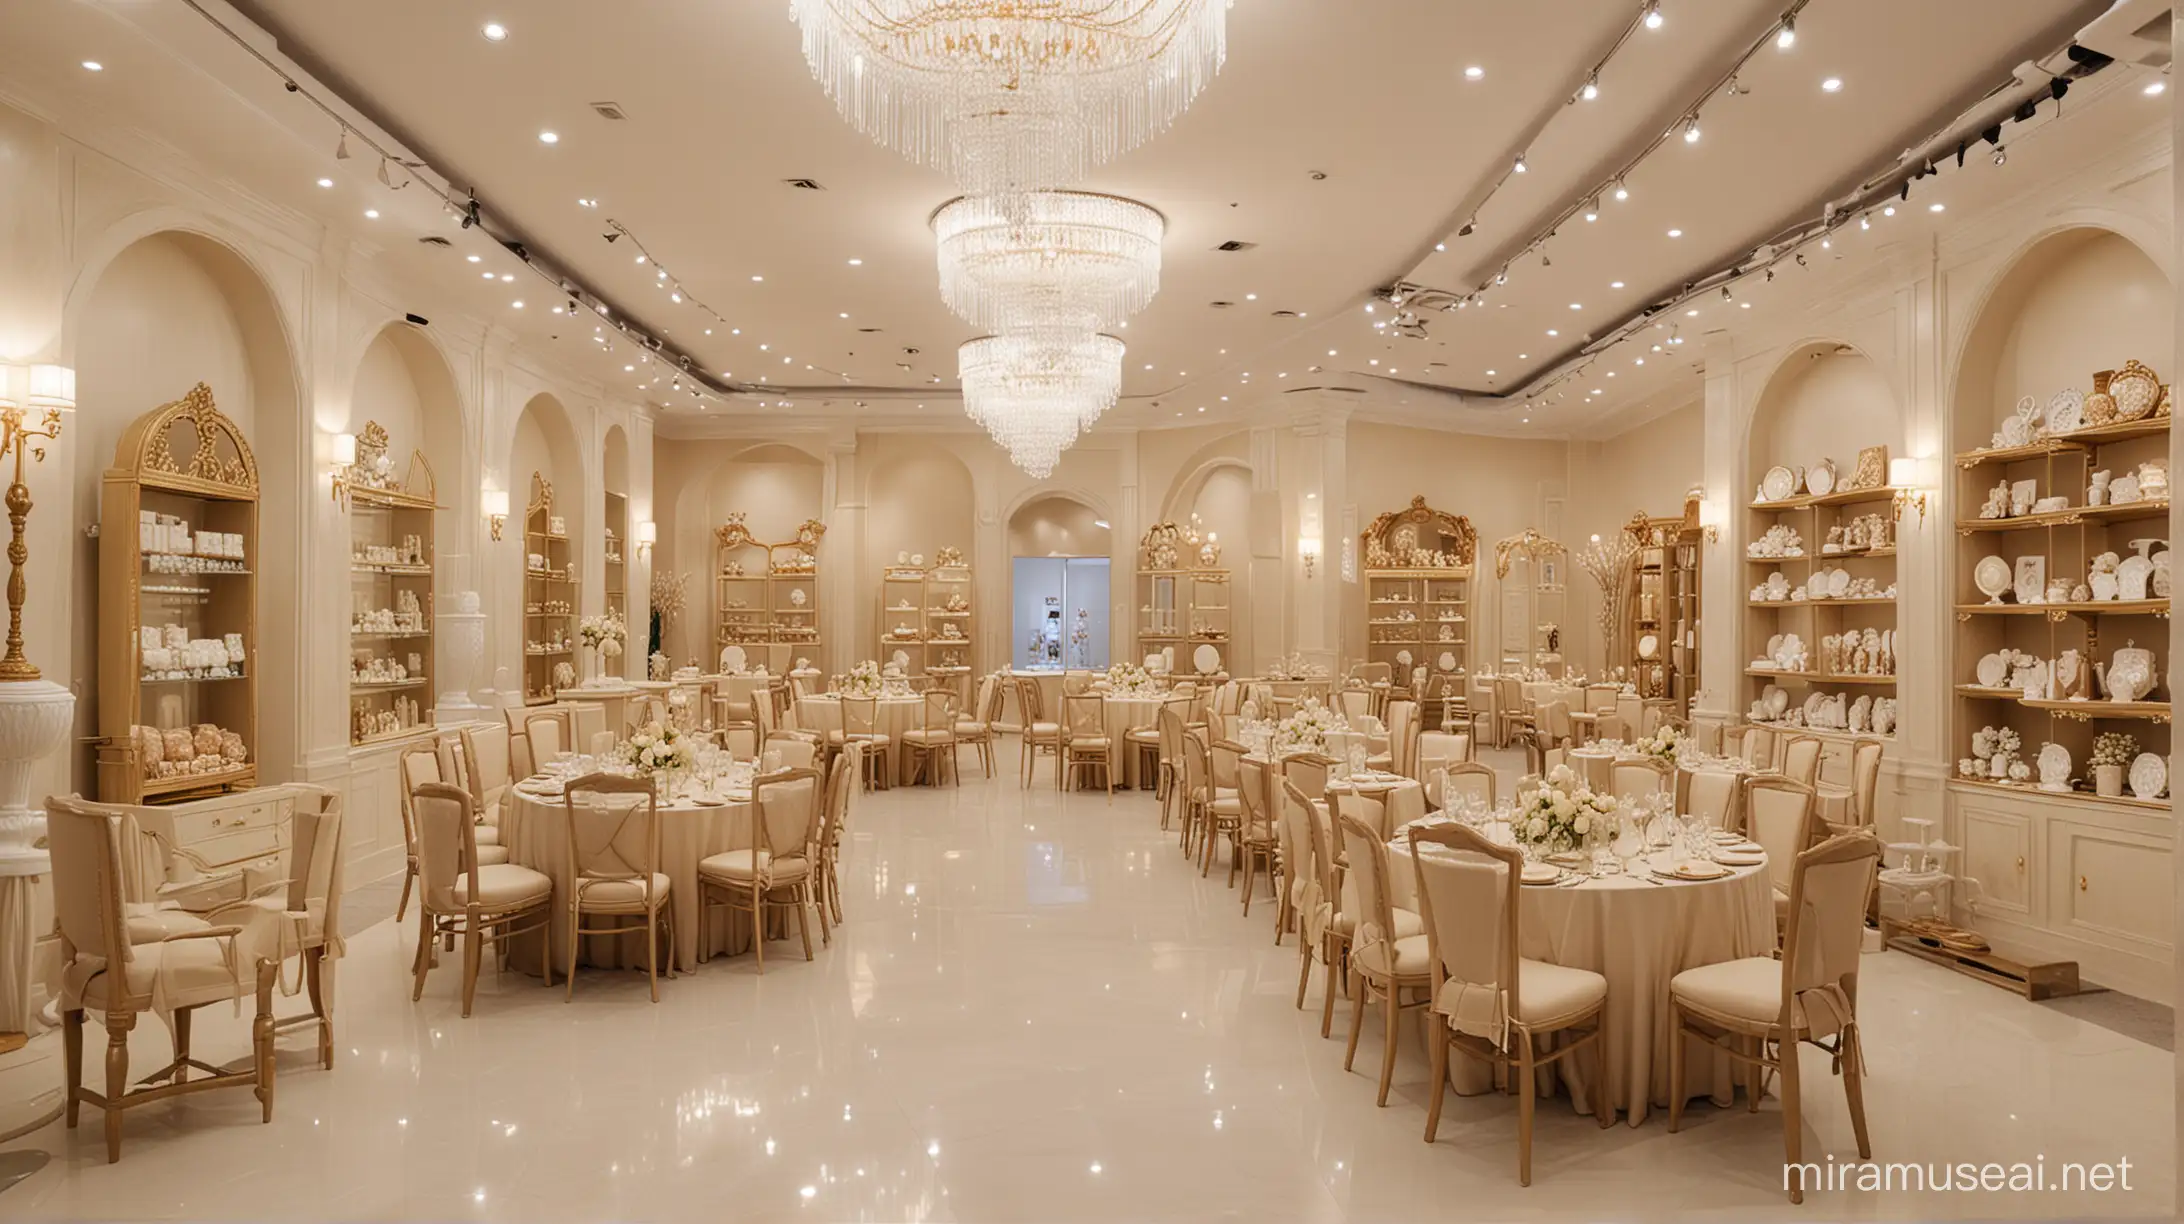 PeranakanThemed Wedding Showroom with Beige Color Palette and Elegant Displays